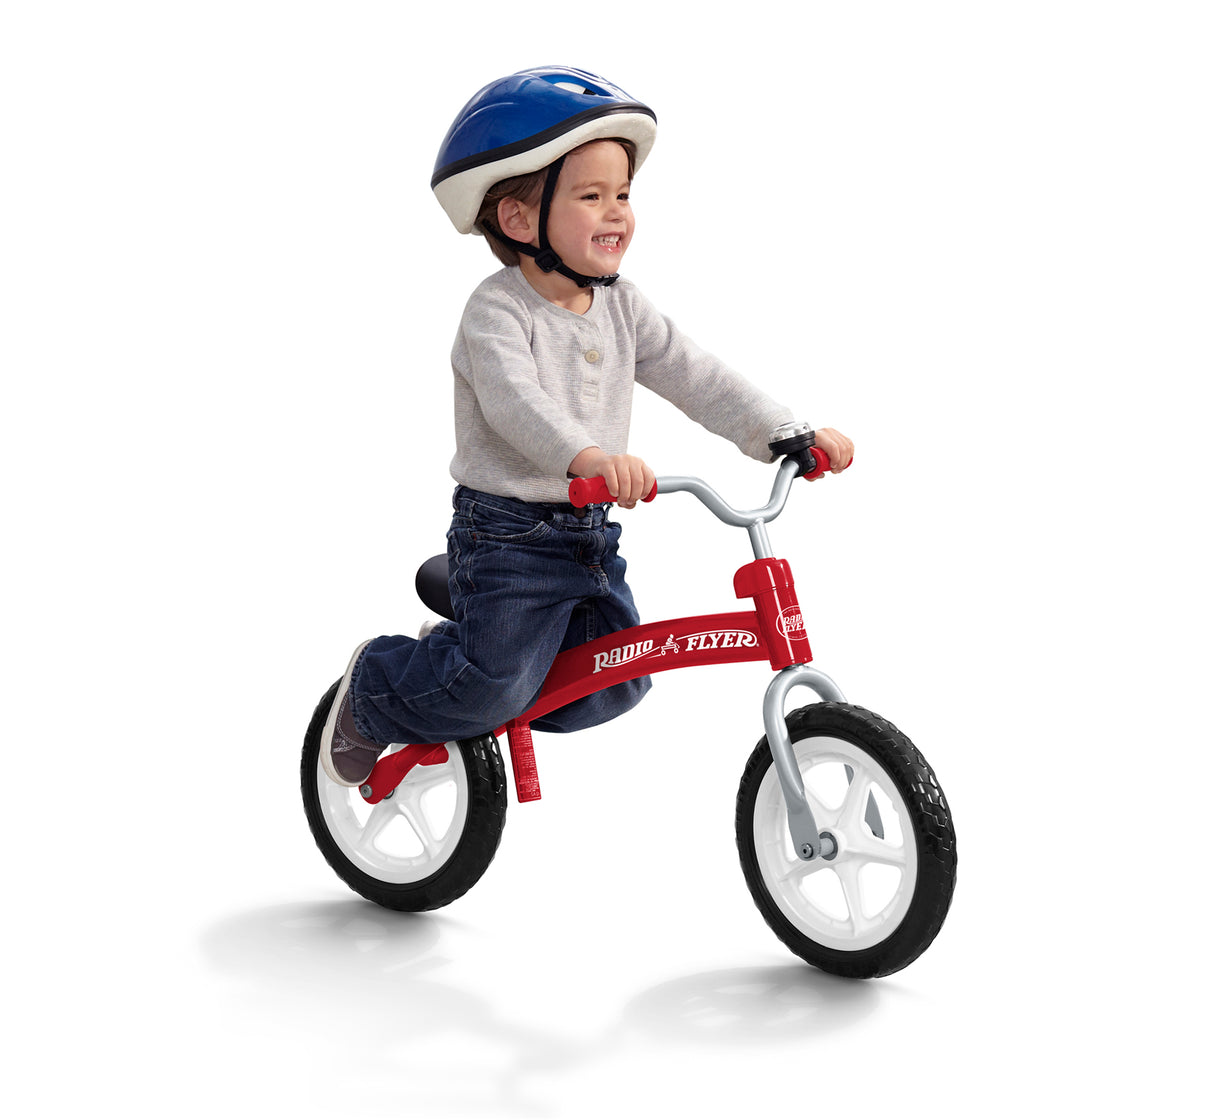 Pedal-free beginner bike allows child to focus on balance